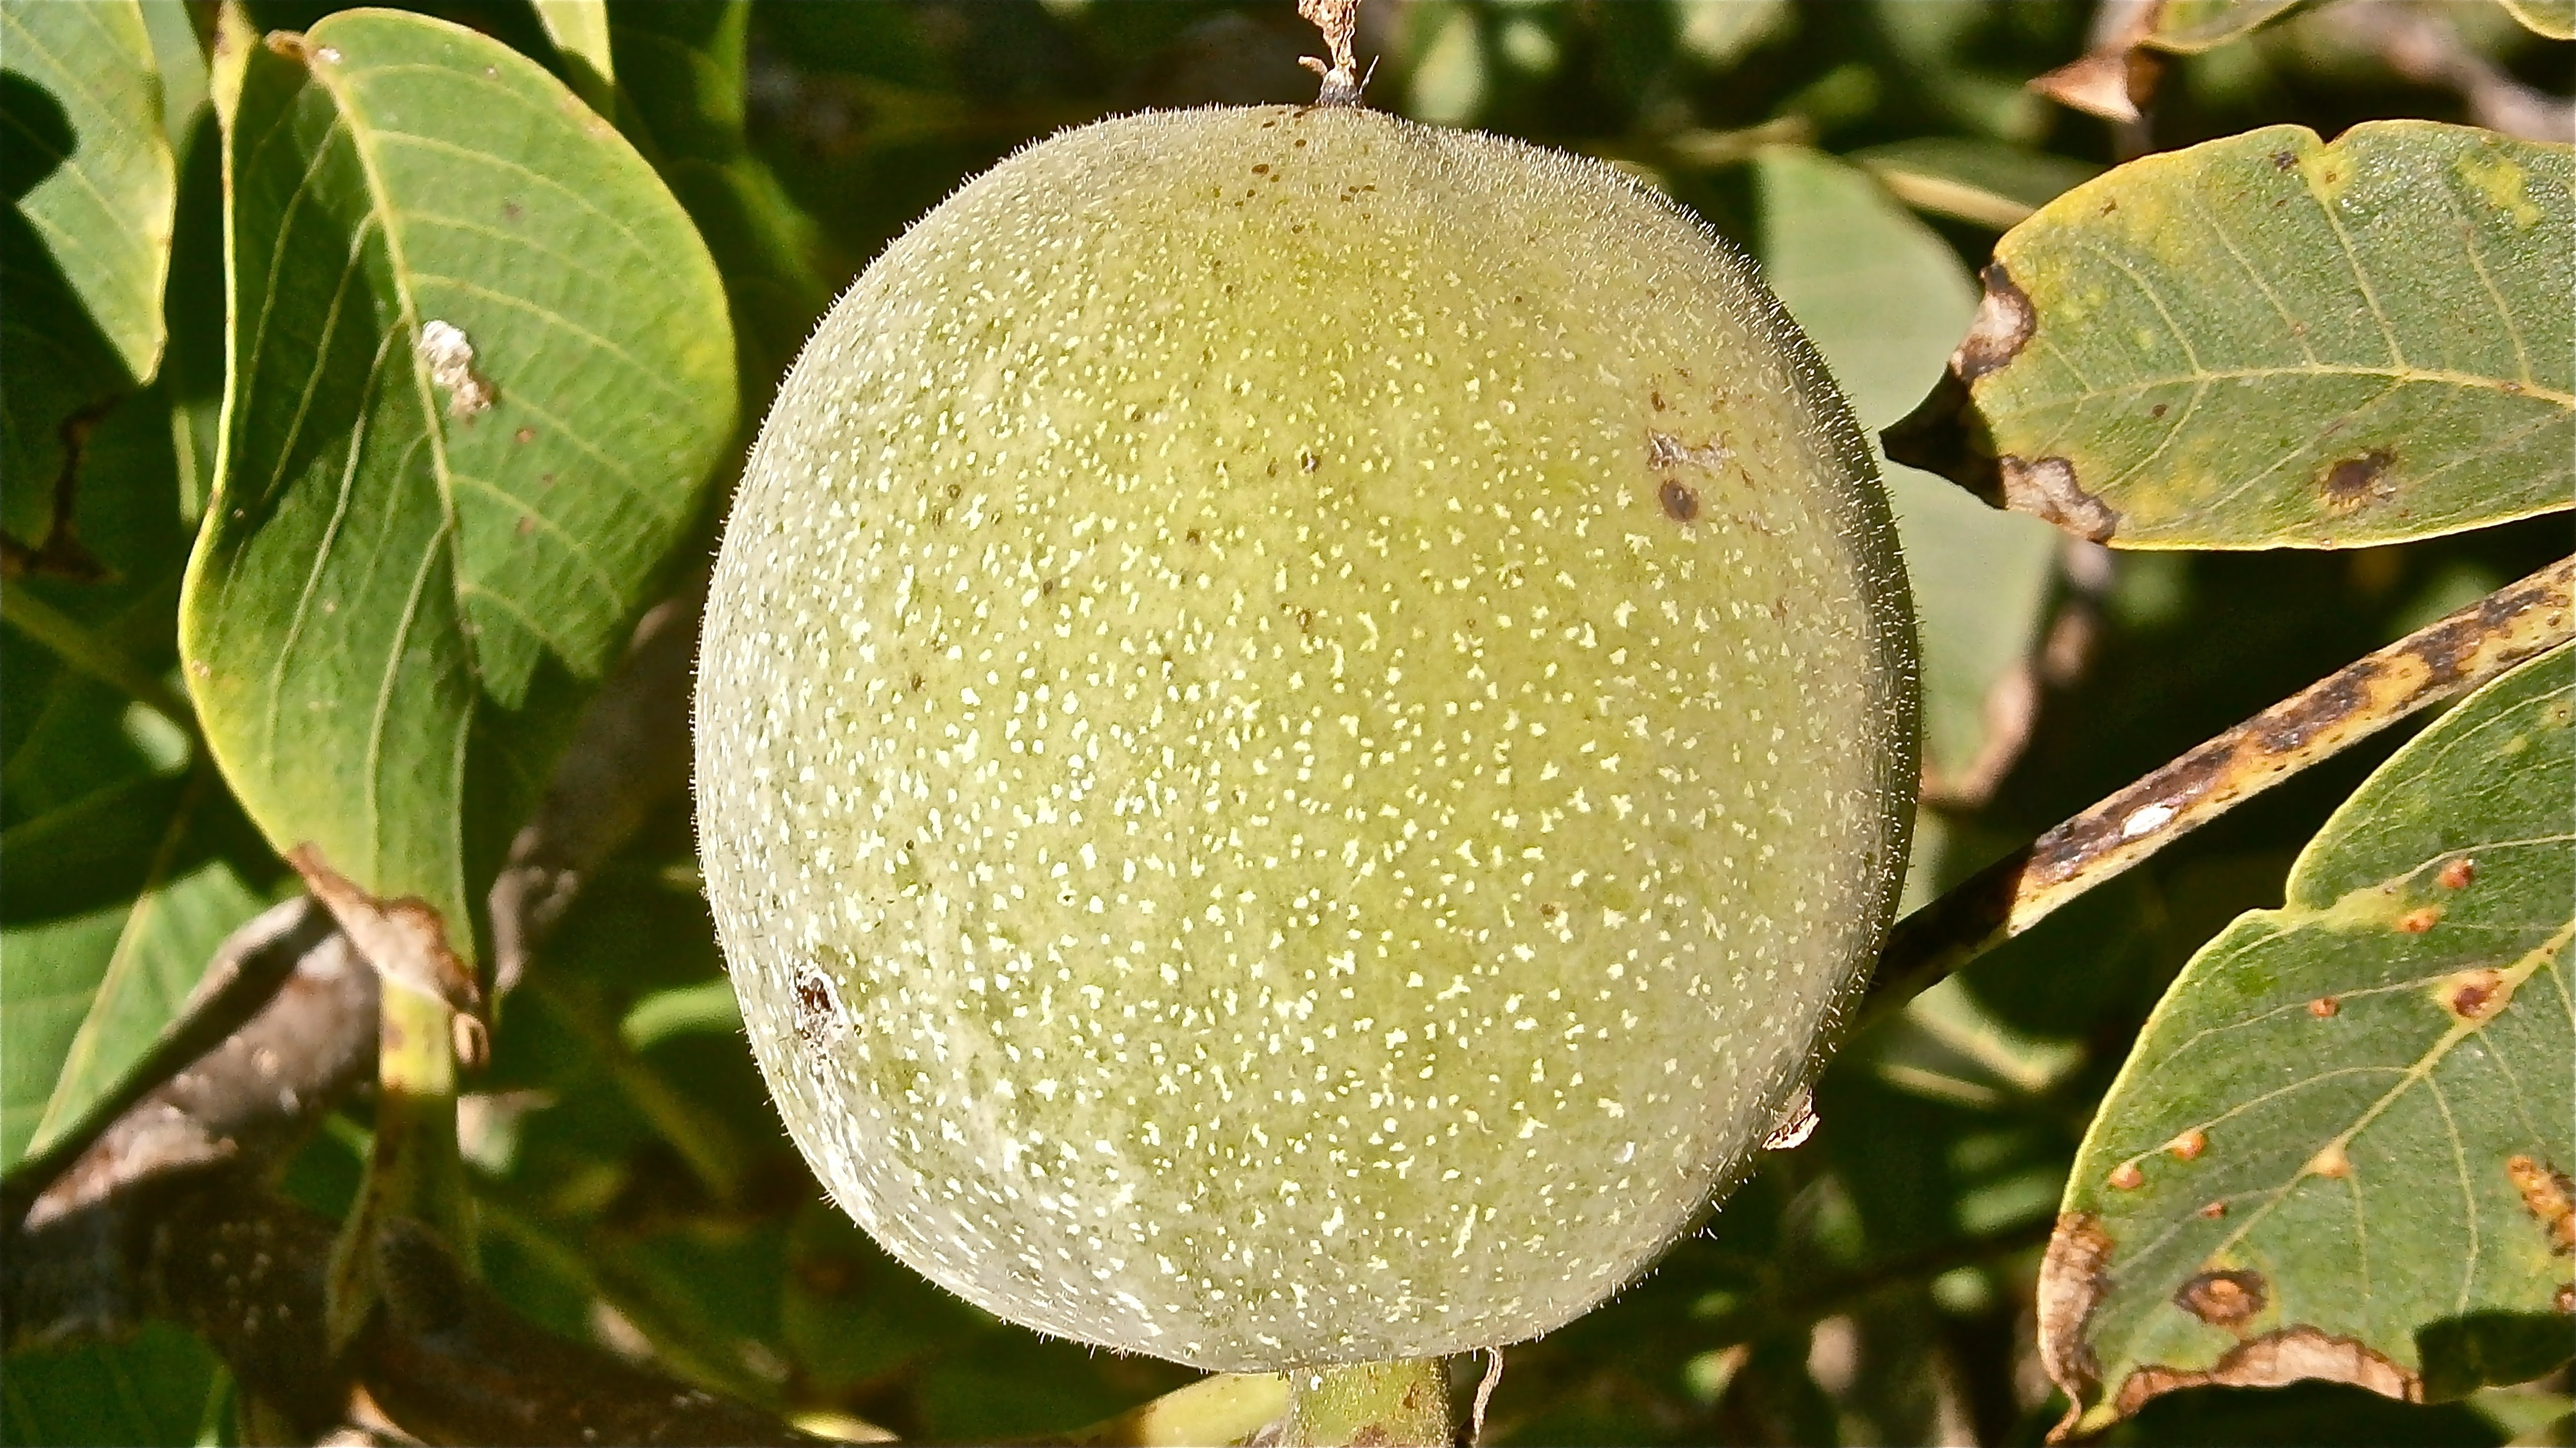 green round fruit